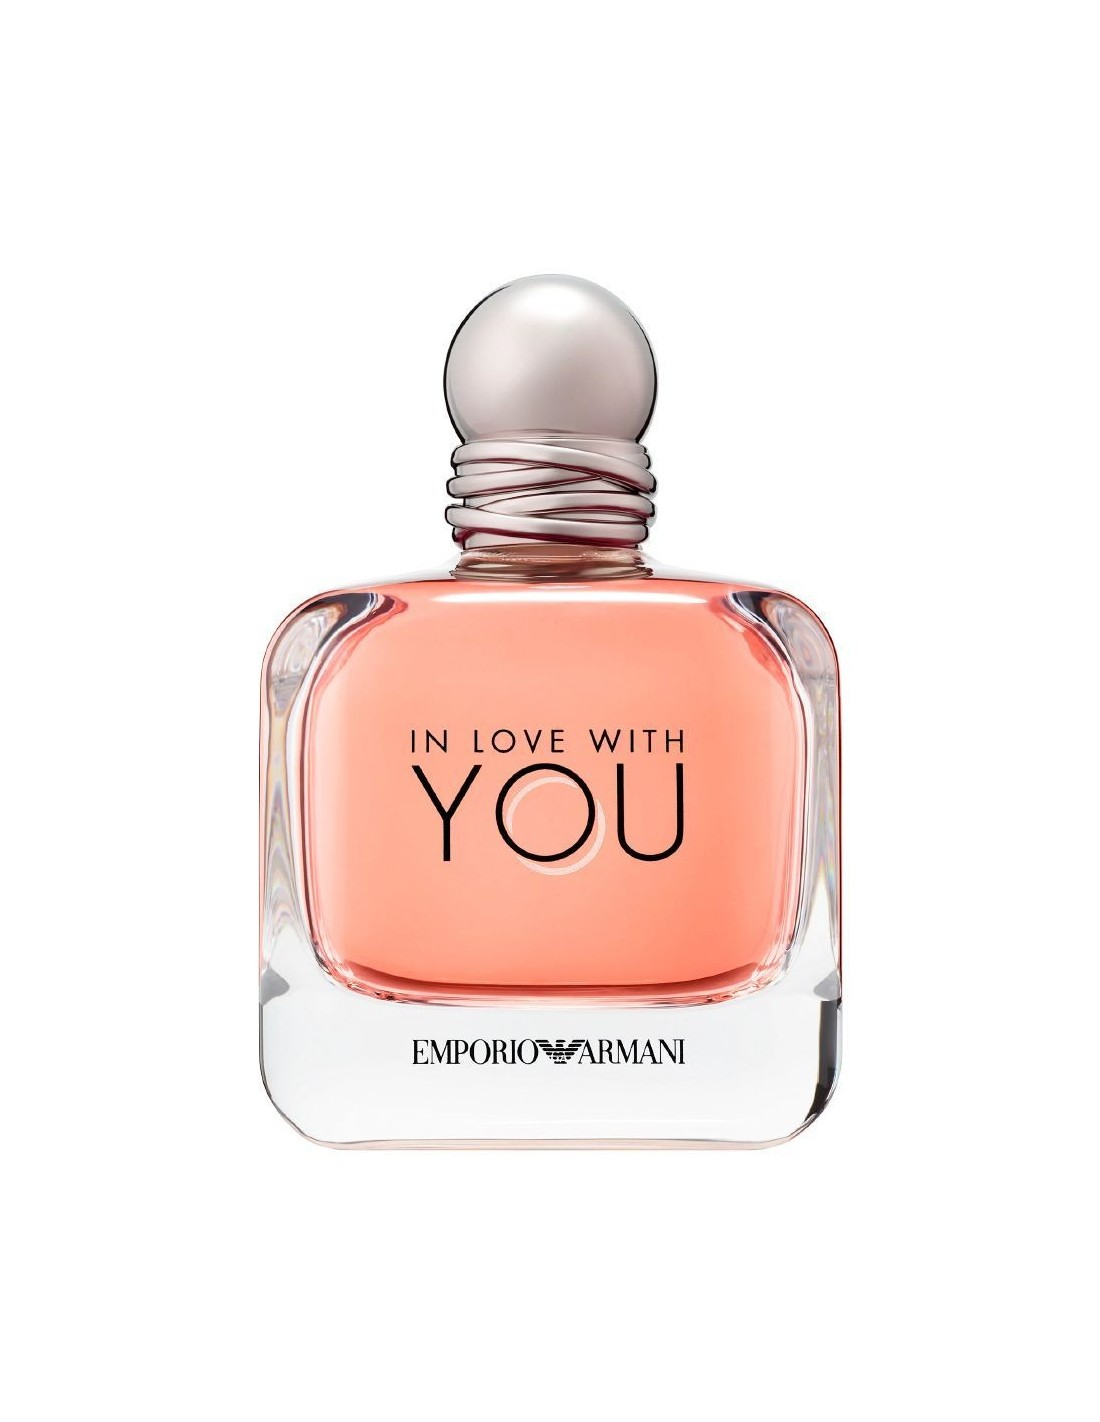 Giorgio Armani In Love With You 100 ml eau de parfum